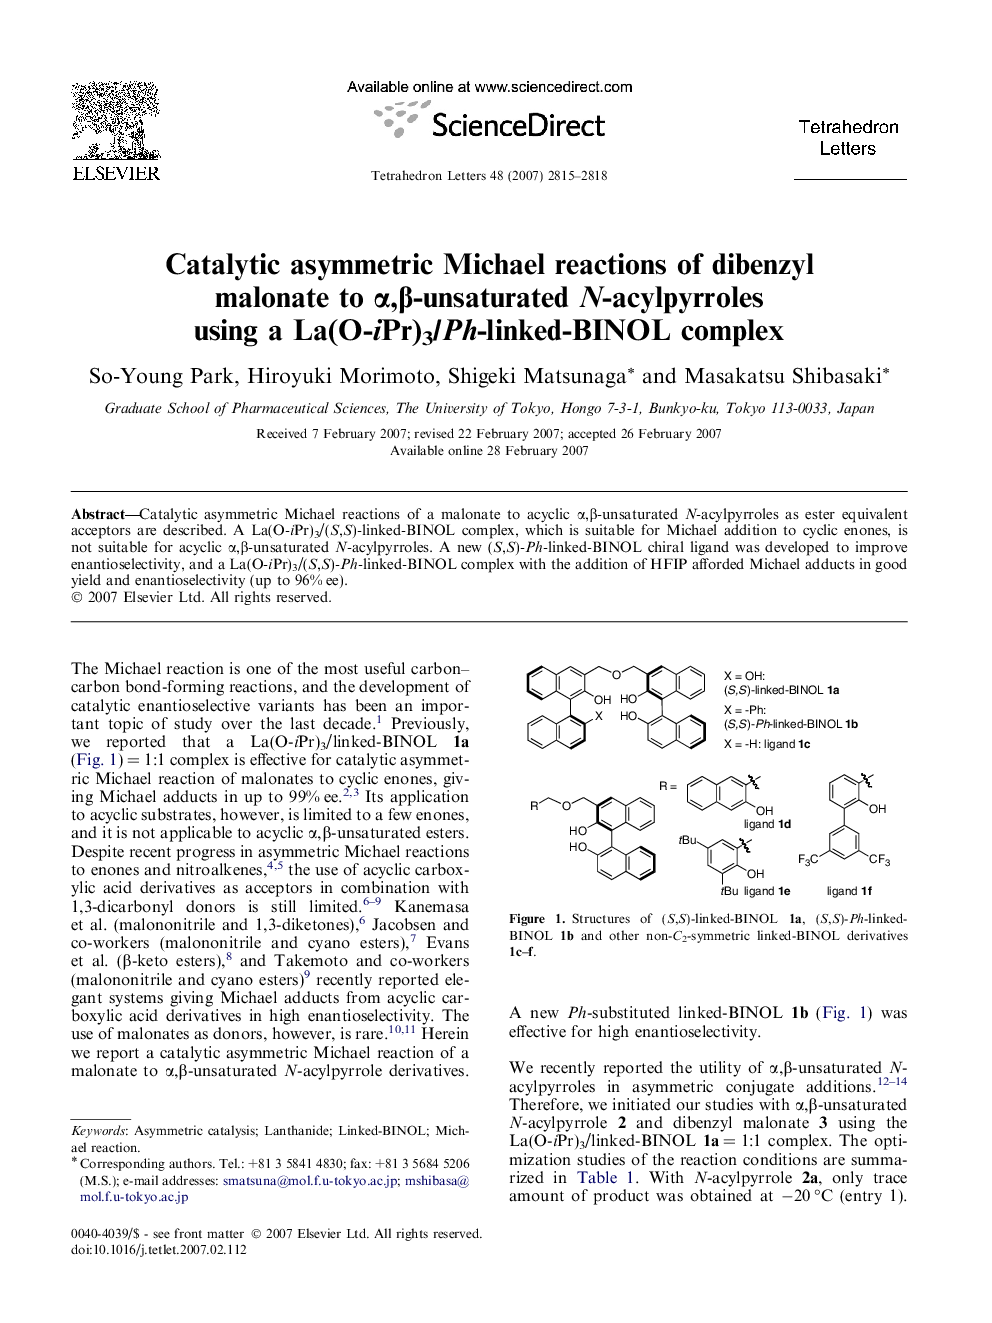 Catalytic asymmetric Michael reactions of dibenzyl malonate to Î±,Î²-unsaturated N-acylpyrroles using a La(O-iPr)3/Ph-linked-BINOL complex